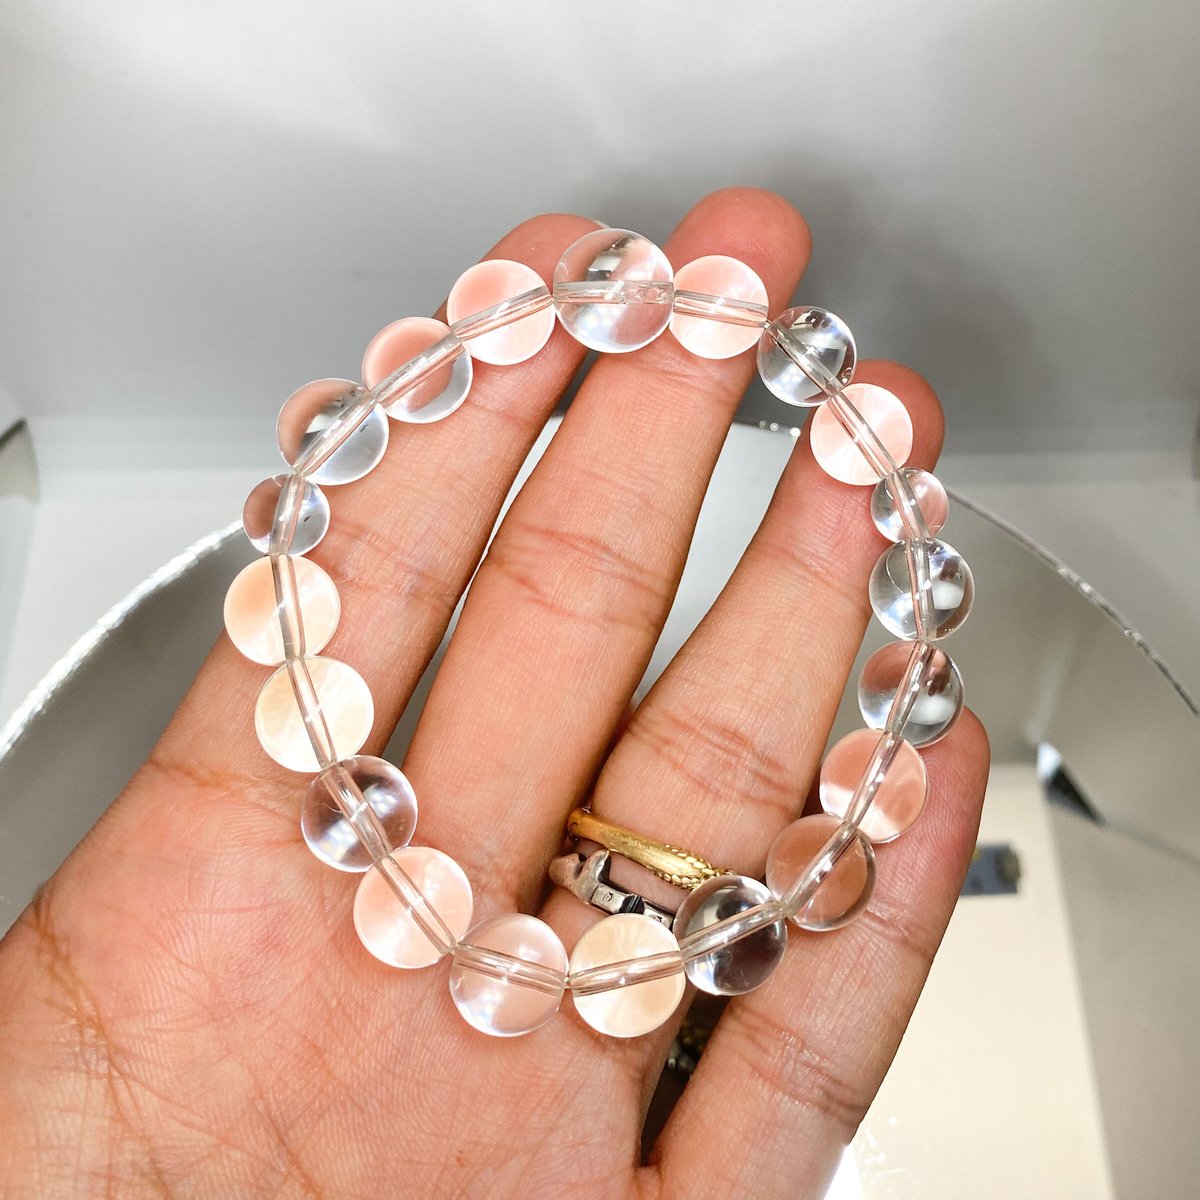 【希少】山梨黒平水晶腕輪数珠約12mm/浄化、潜在能力、気を整える